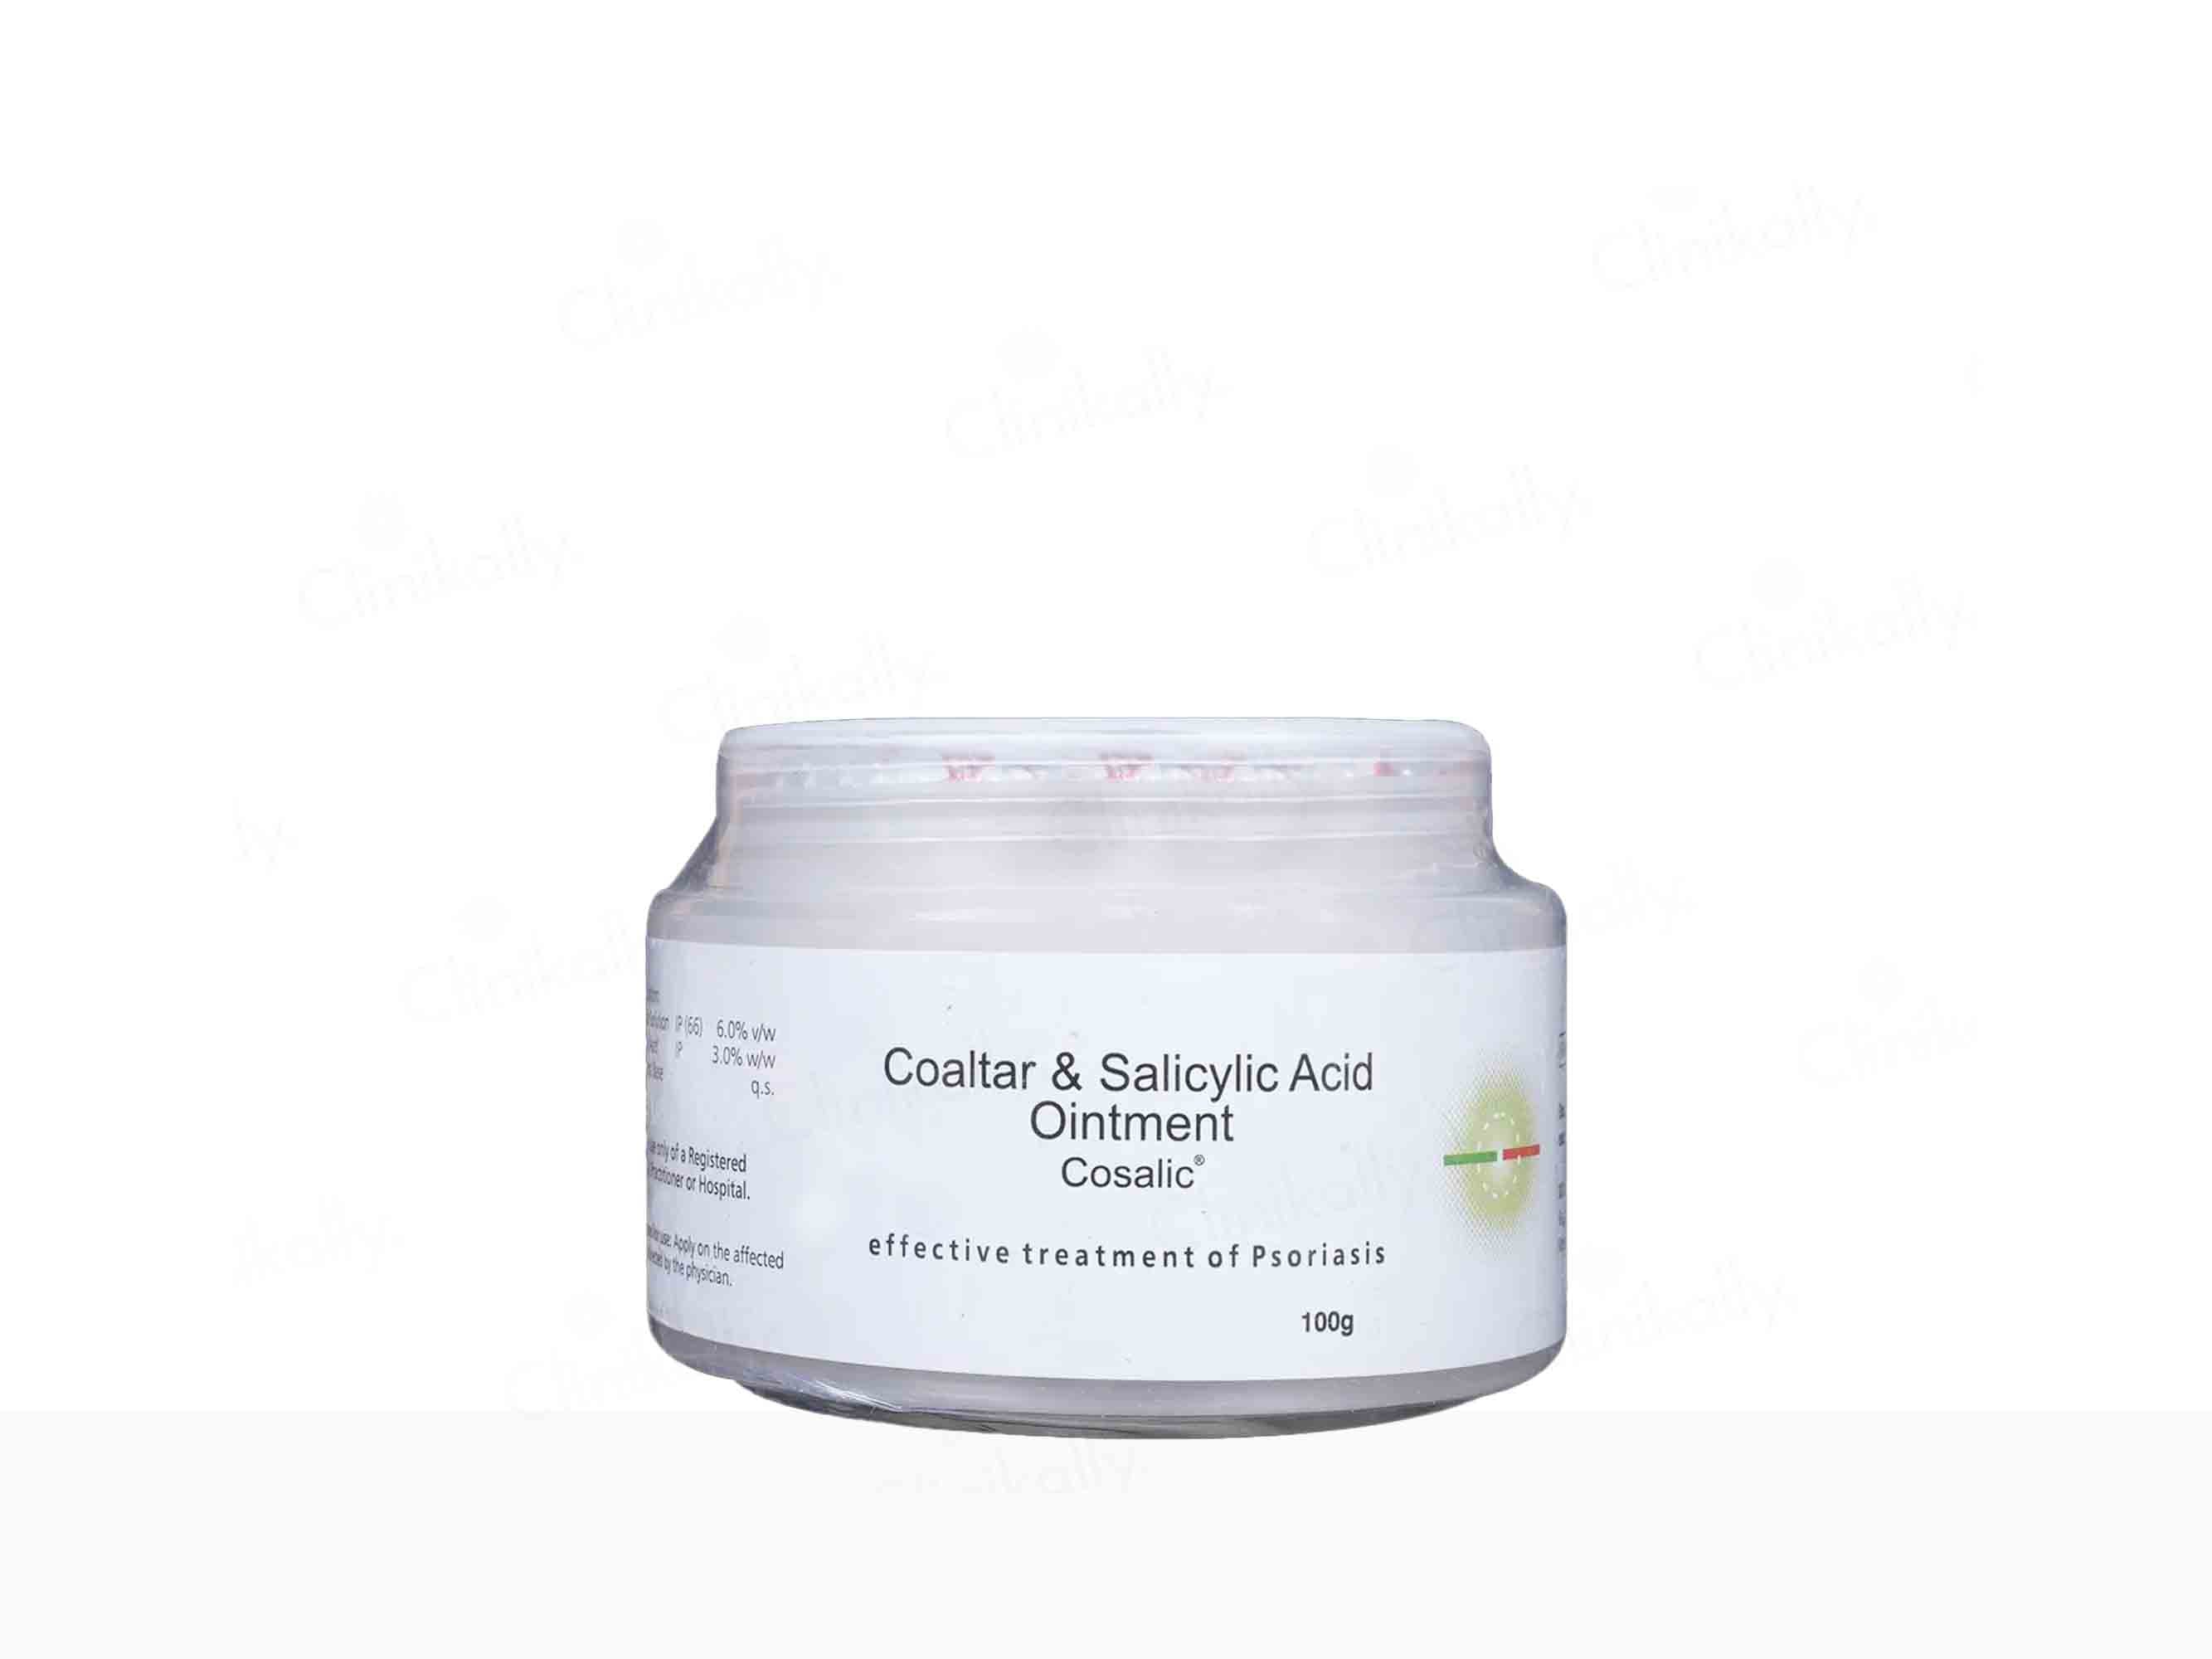 Cosalic Ointment with Coal Tar & Salicylic Acid